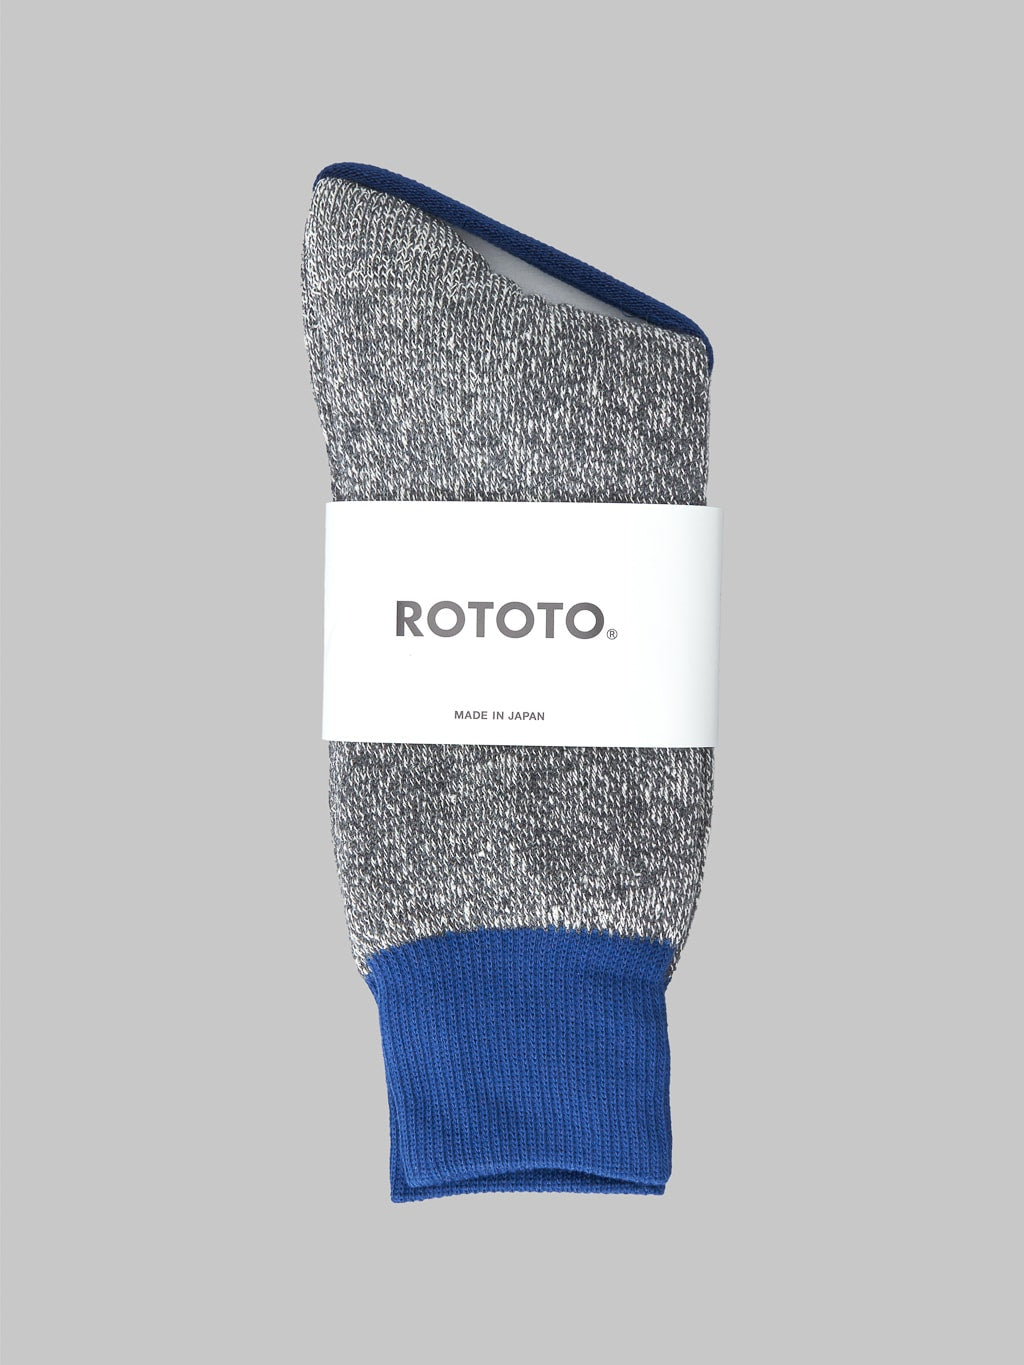 Rototo Double Face Socks Silk Blue Grey Japan Made